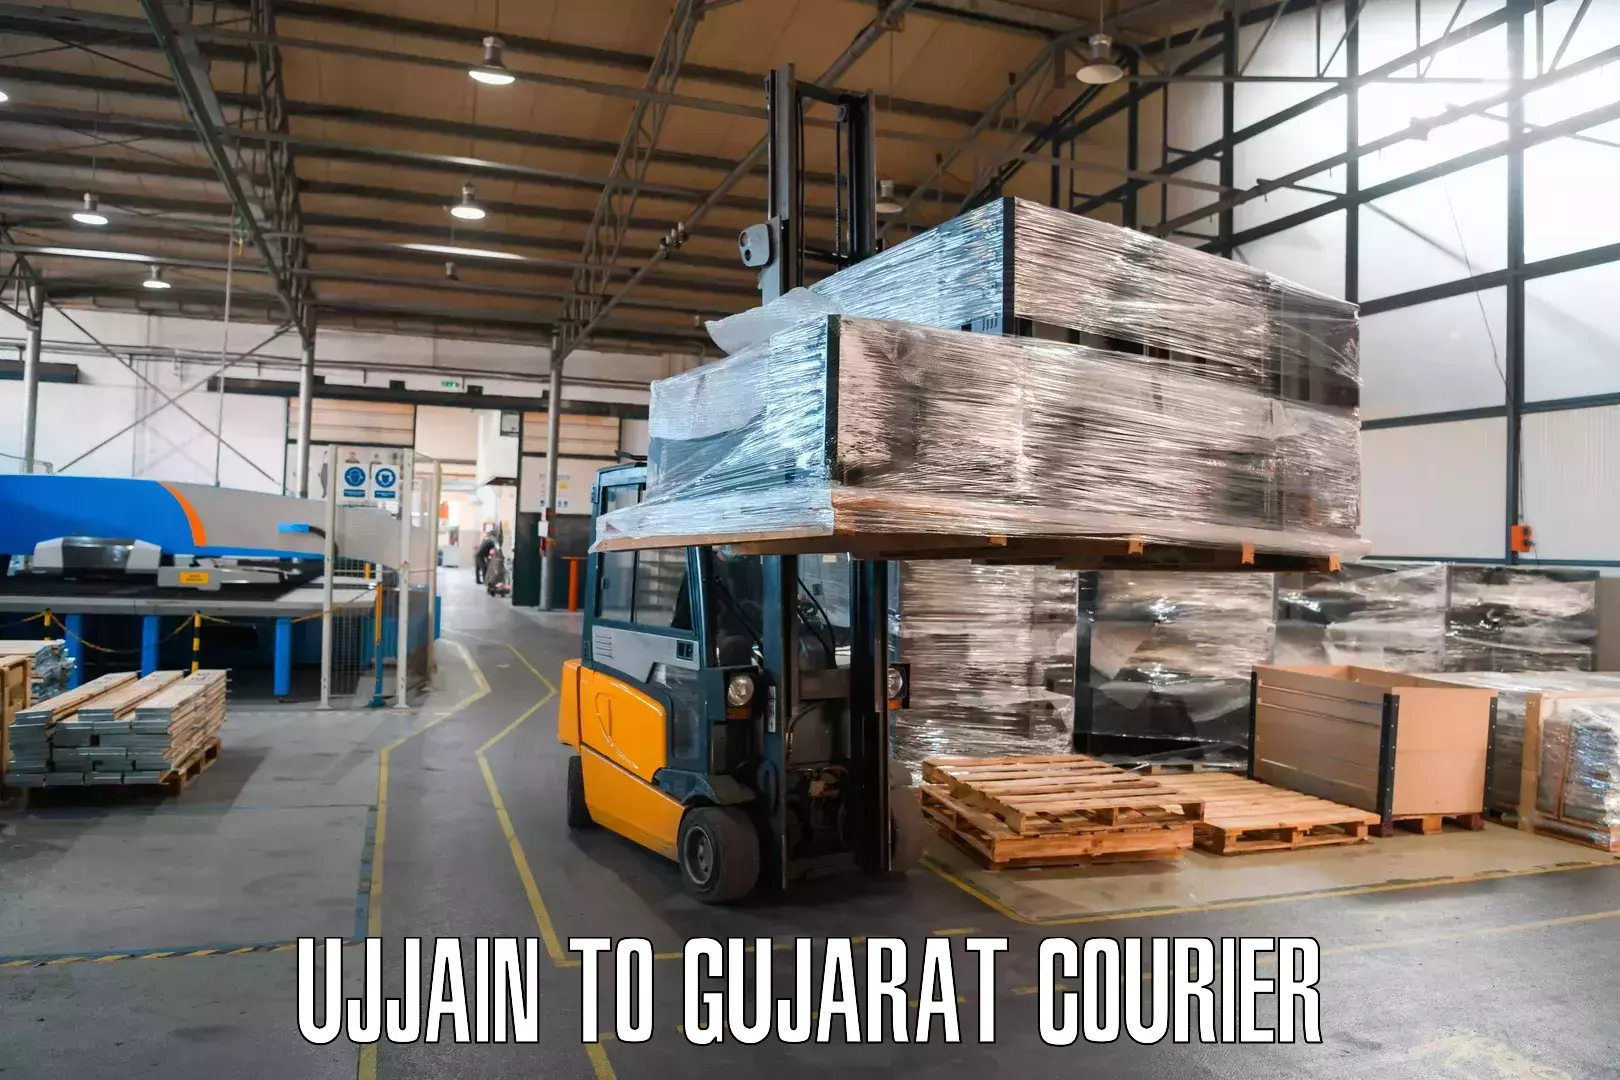 Courier service efficiency Ujjain to Gujarat